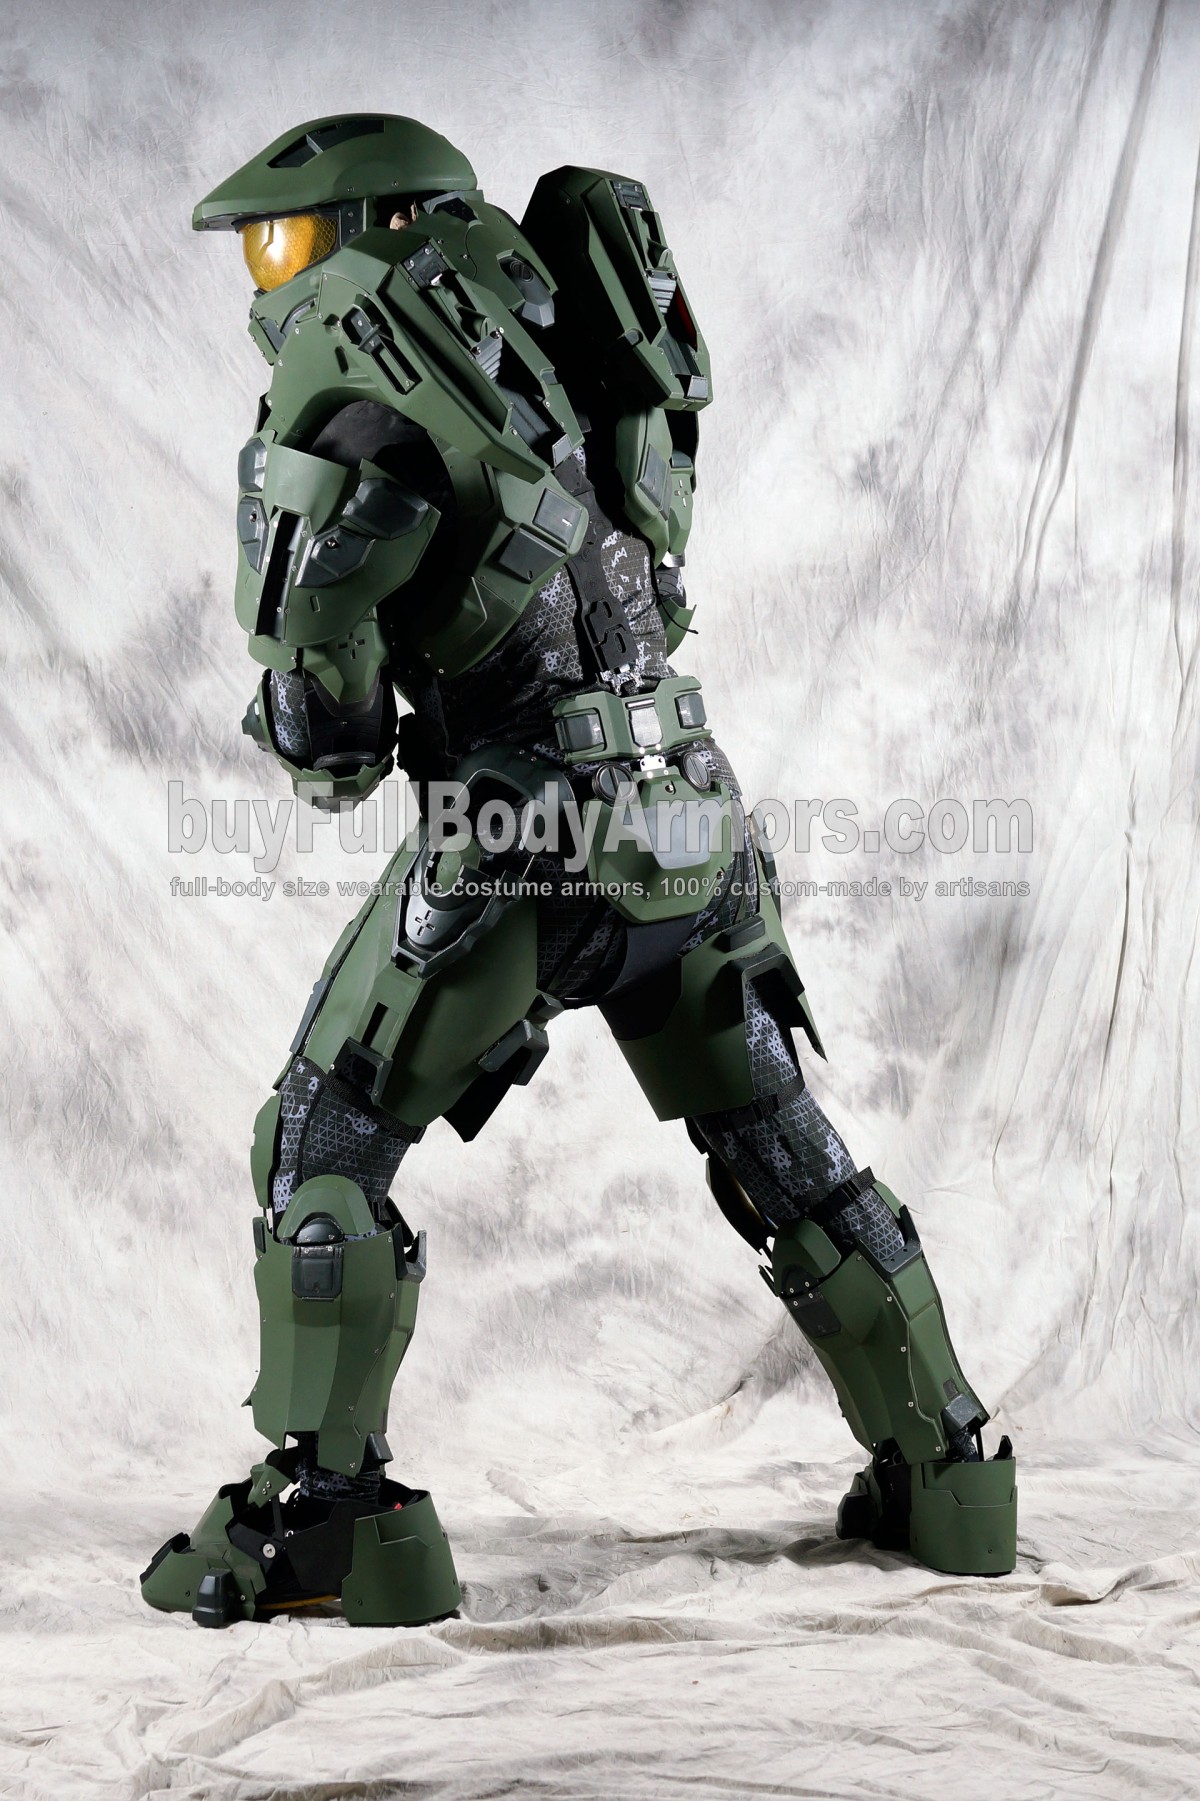 Halo master chief armor costume